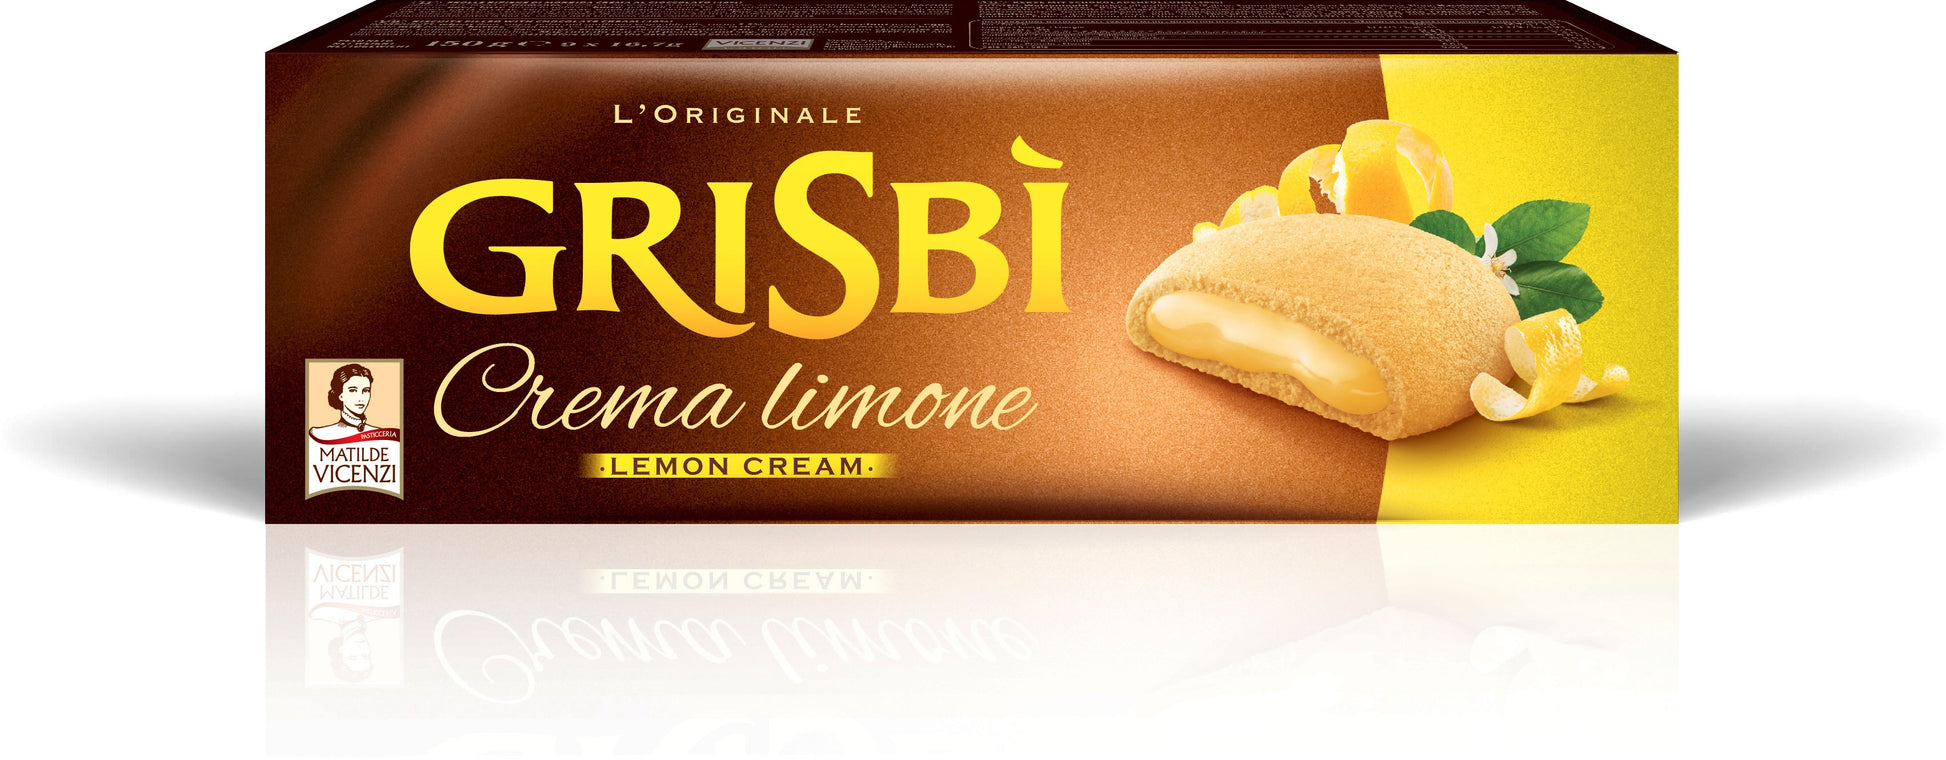 Grisbì- Biscotti Ripieni al Limone - Gr. 150